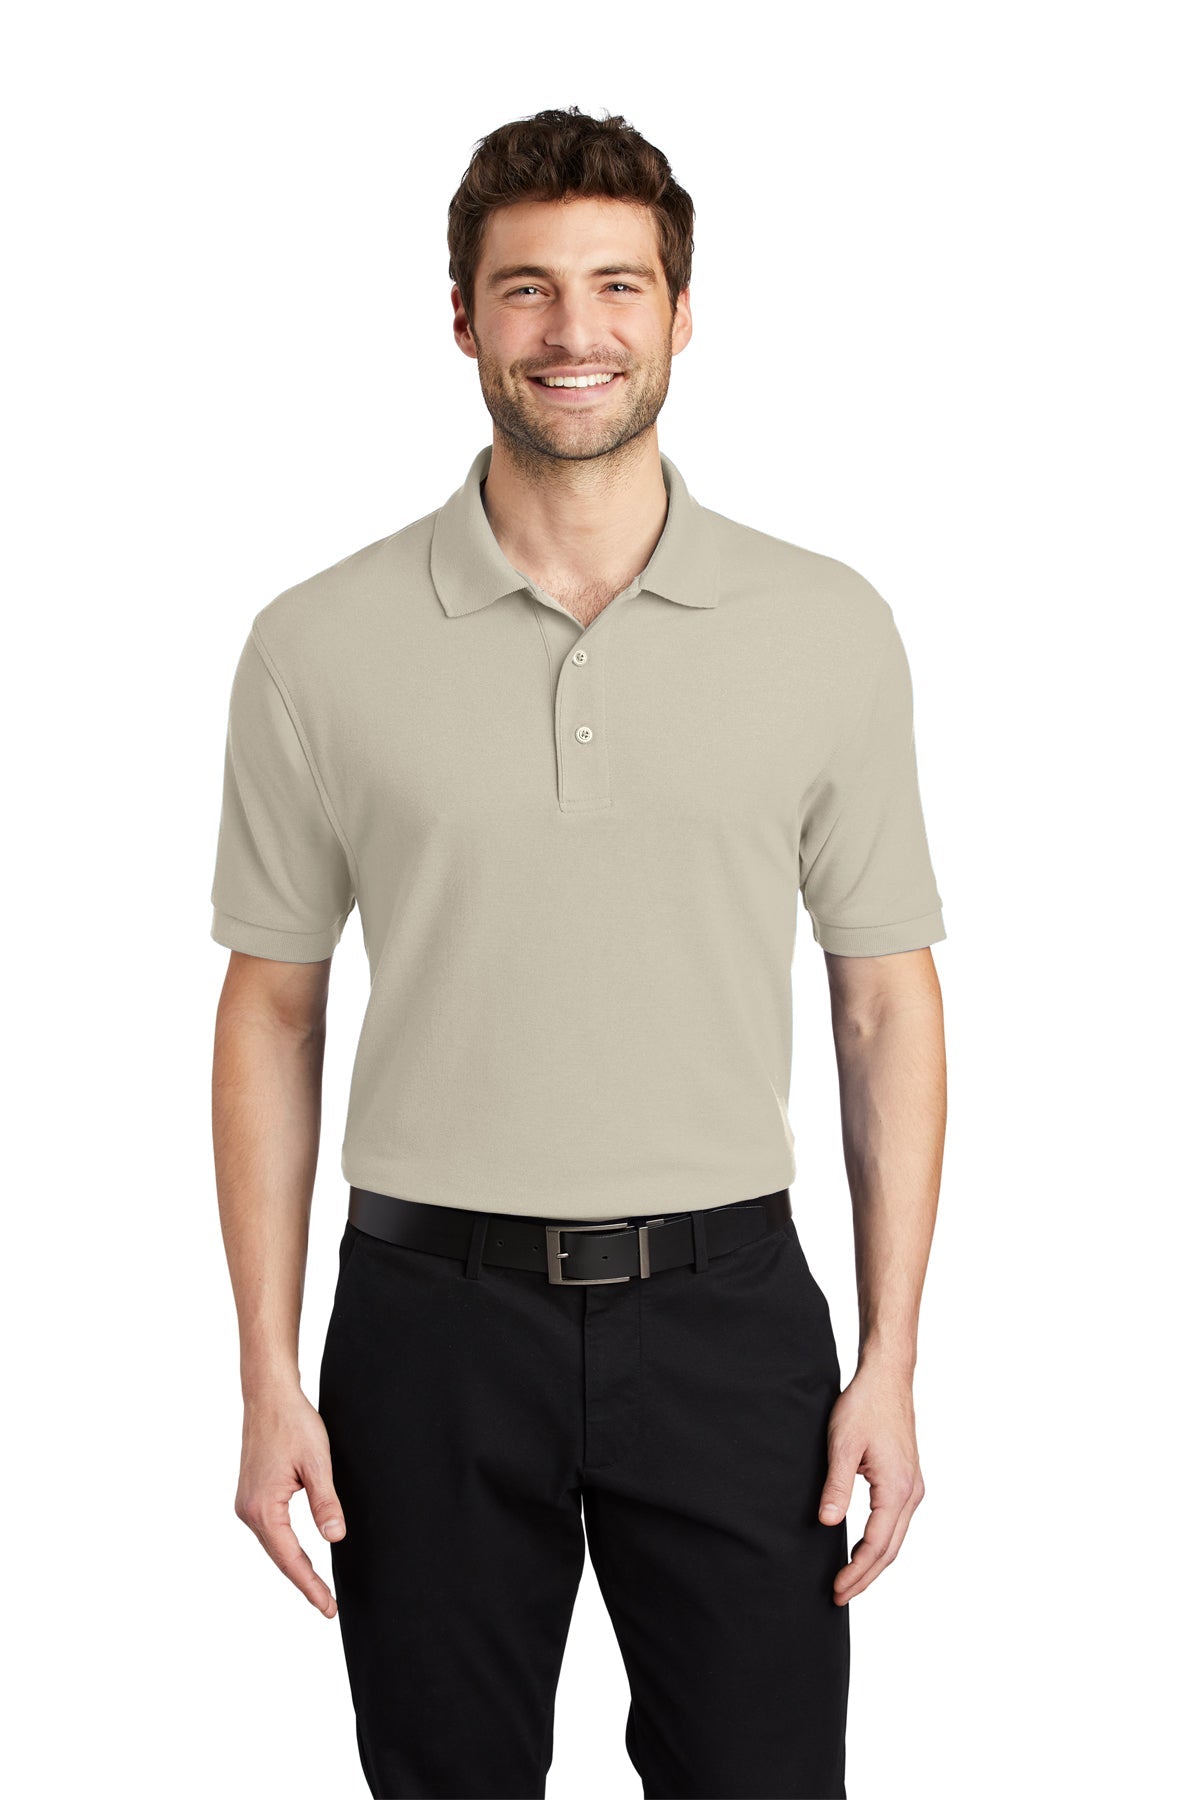 Poly/Cotton Polos - BT Imprintables Shirts